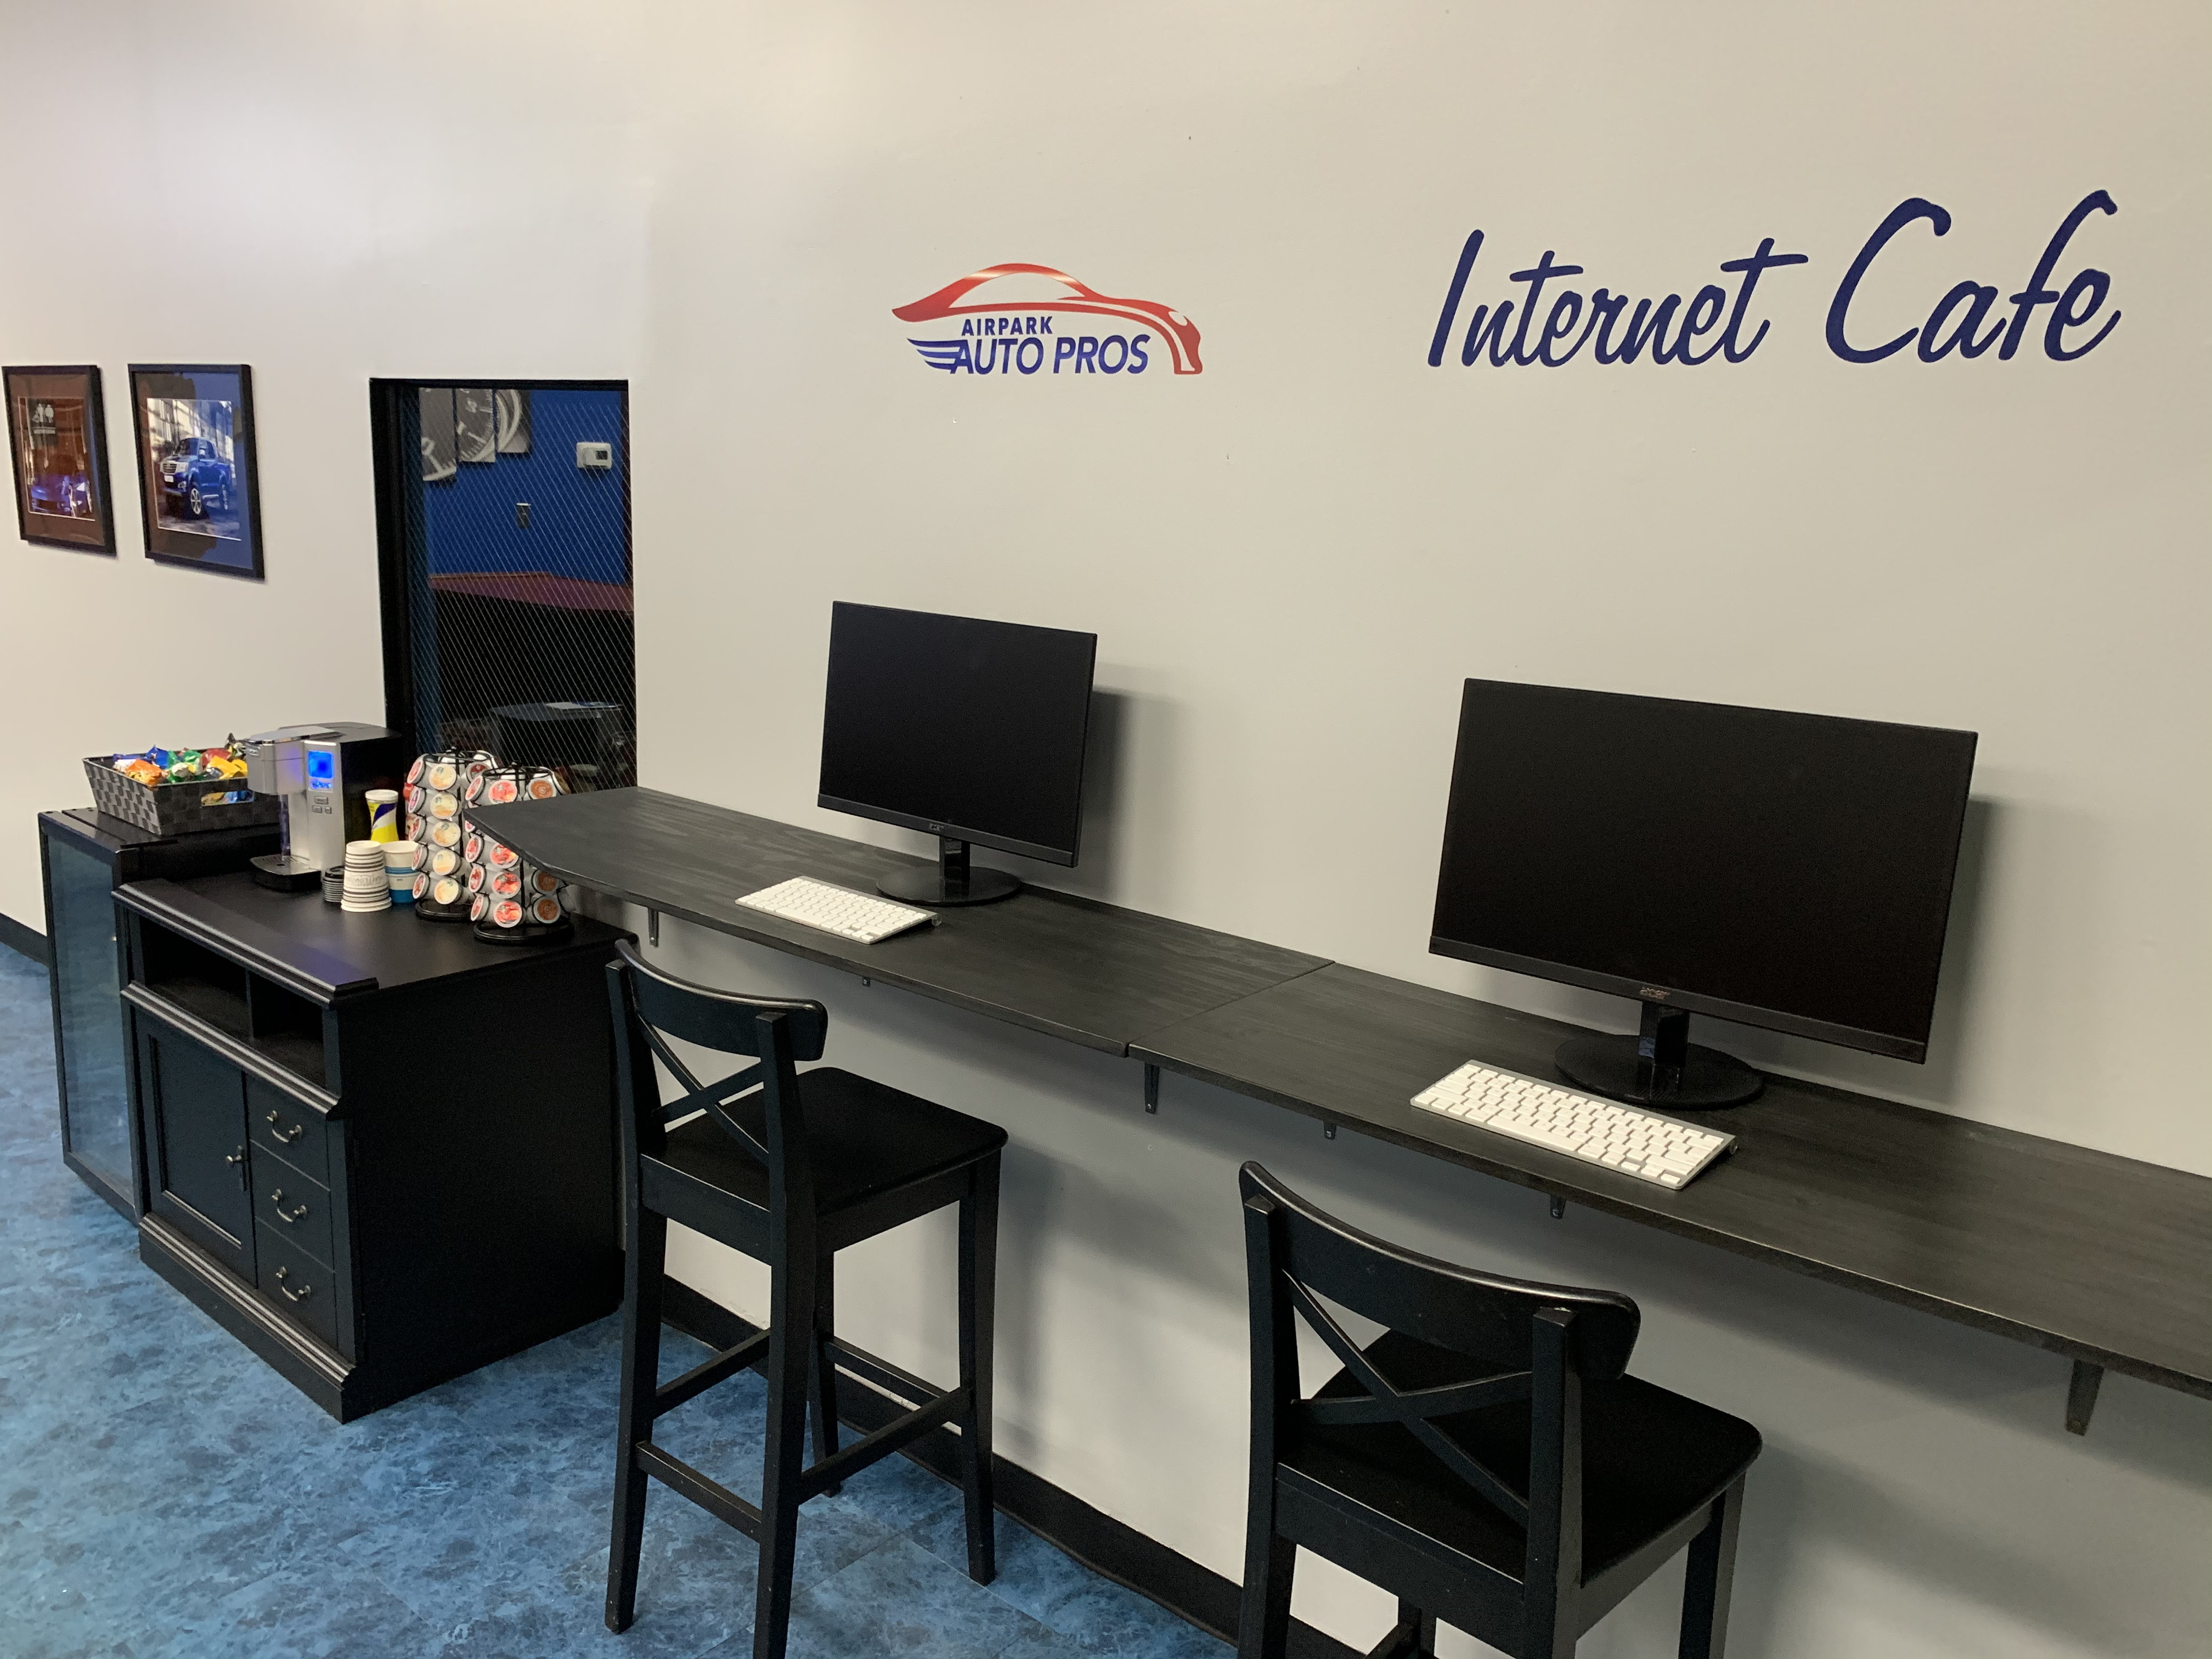 Internet Cafe | Airpark Auto Pros